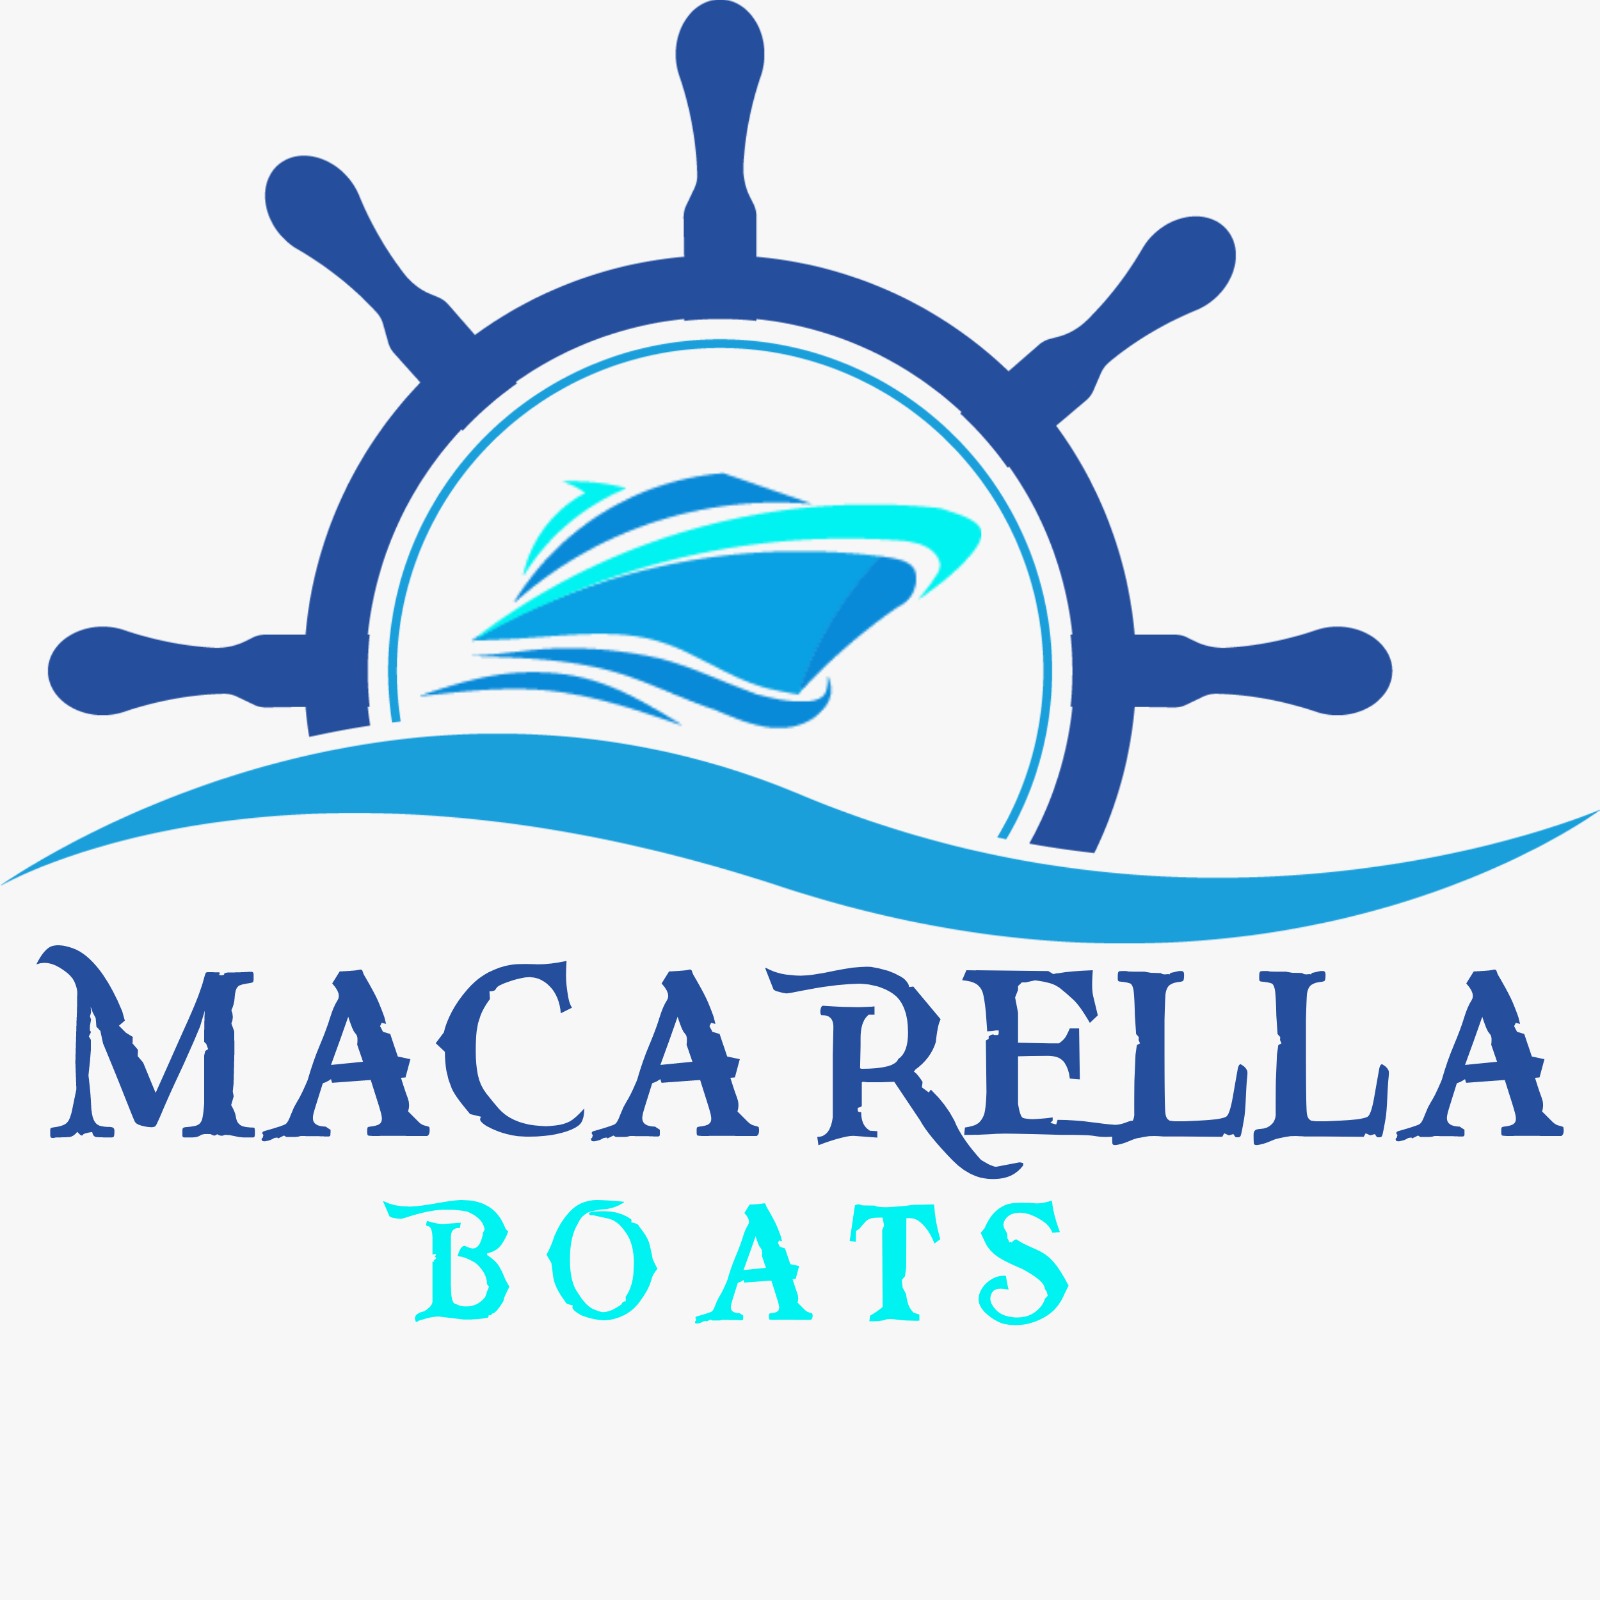 macarella_boats